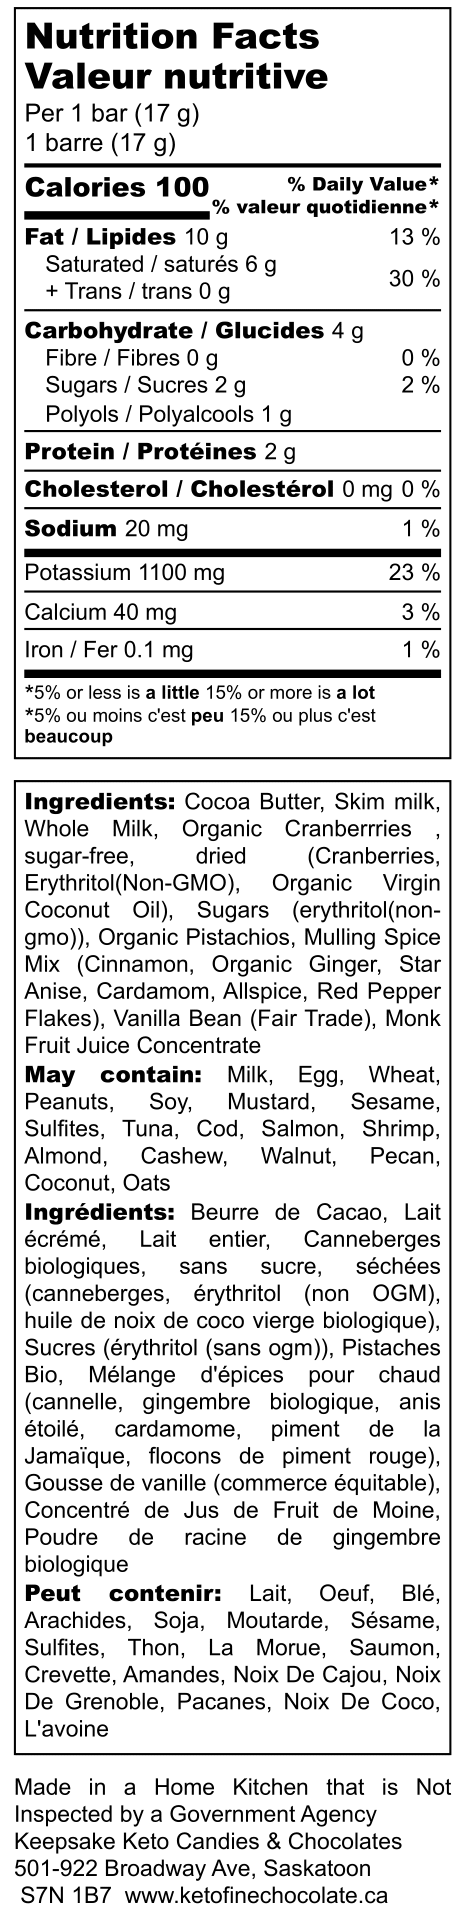 Image: MonKKey White-Keto Cranberry & Pistachio - Nutrition Label